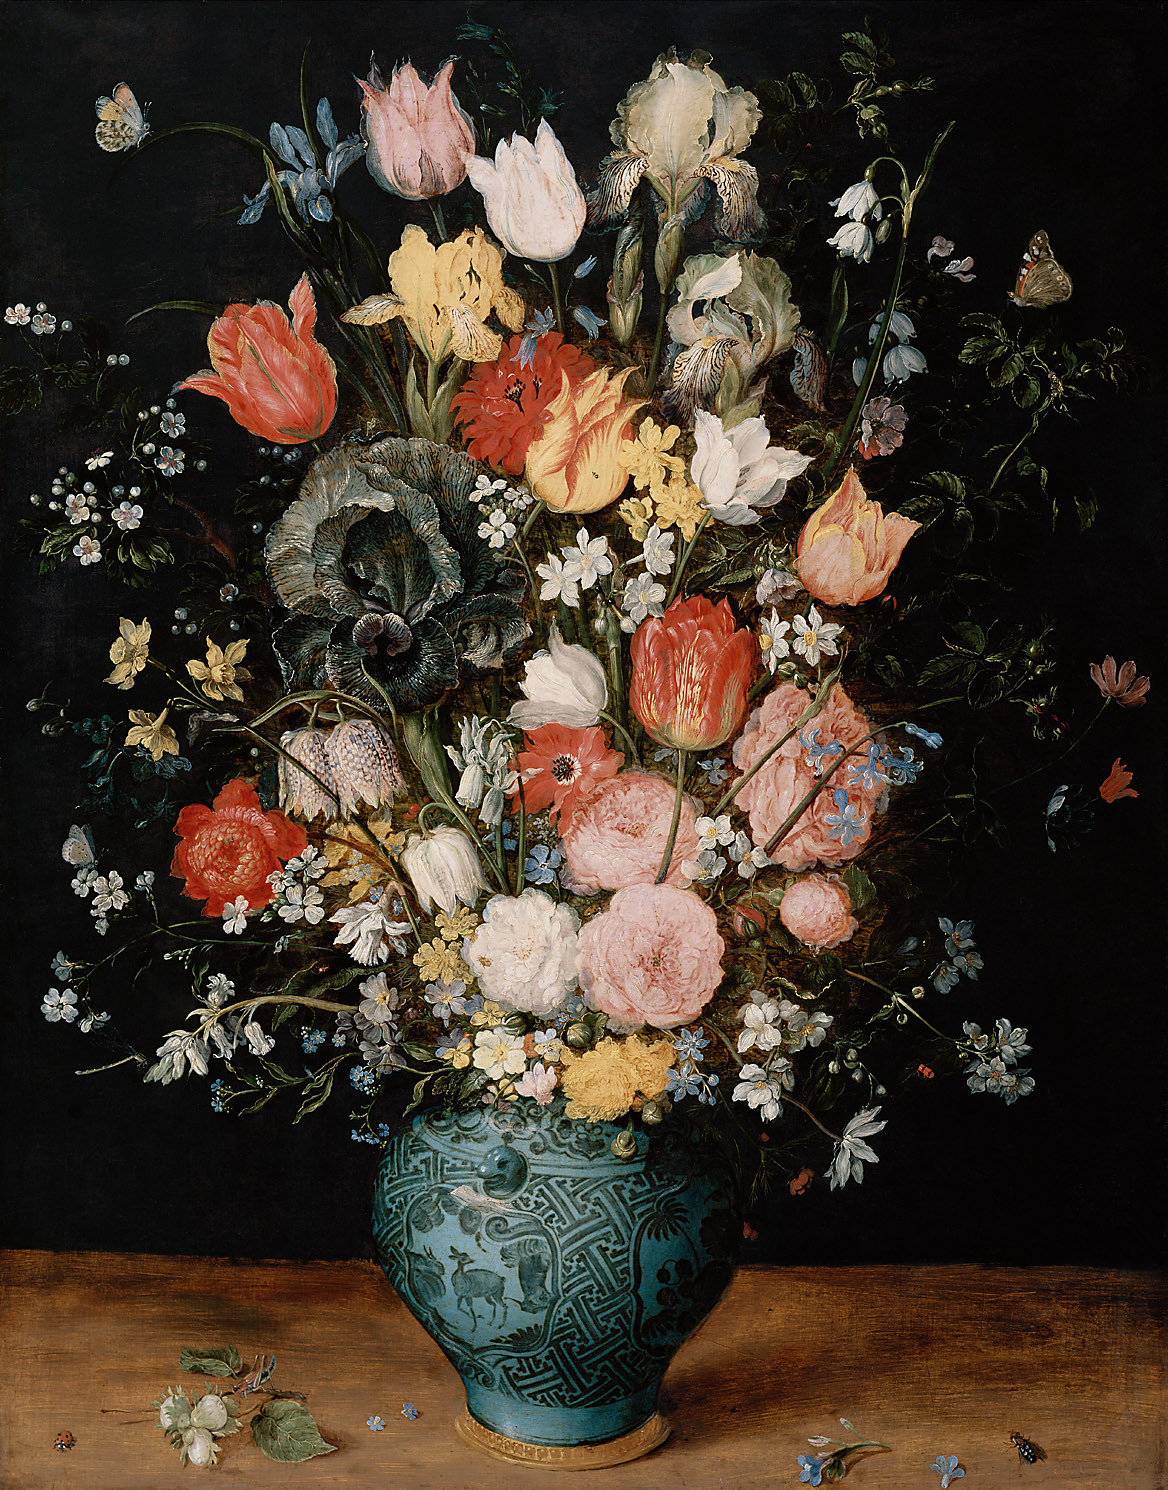 Bouquet of Flowers in a Blue Vase by Jan Brueghel the Elder - c. 1608 - 65.8 × 51 cm Kunsthistorisches Museum